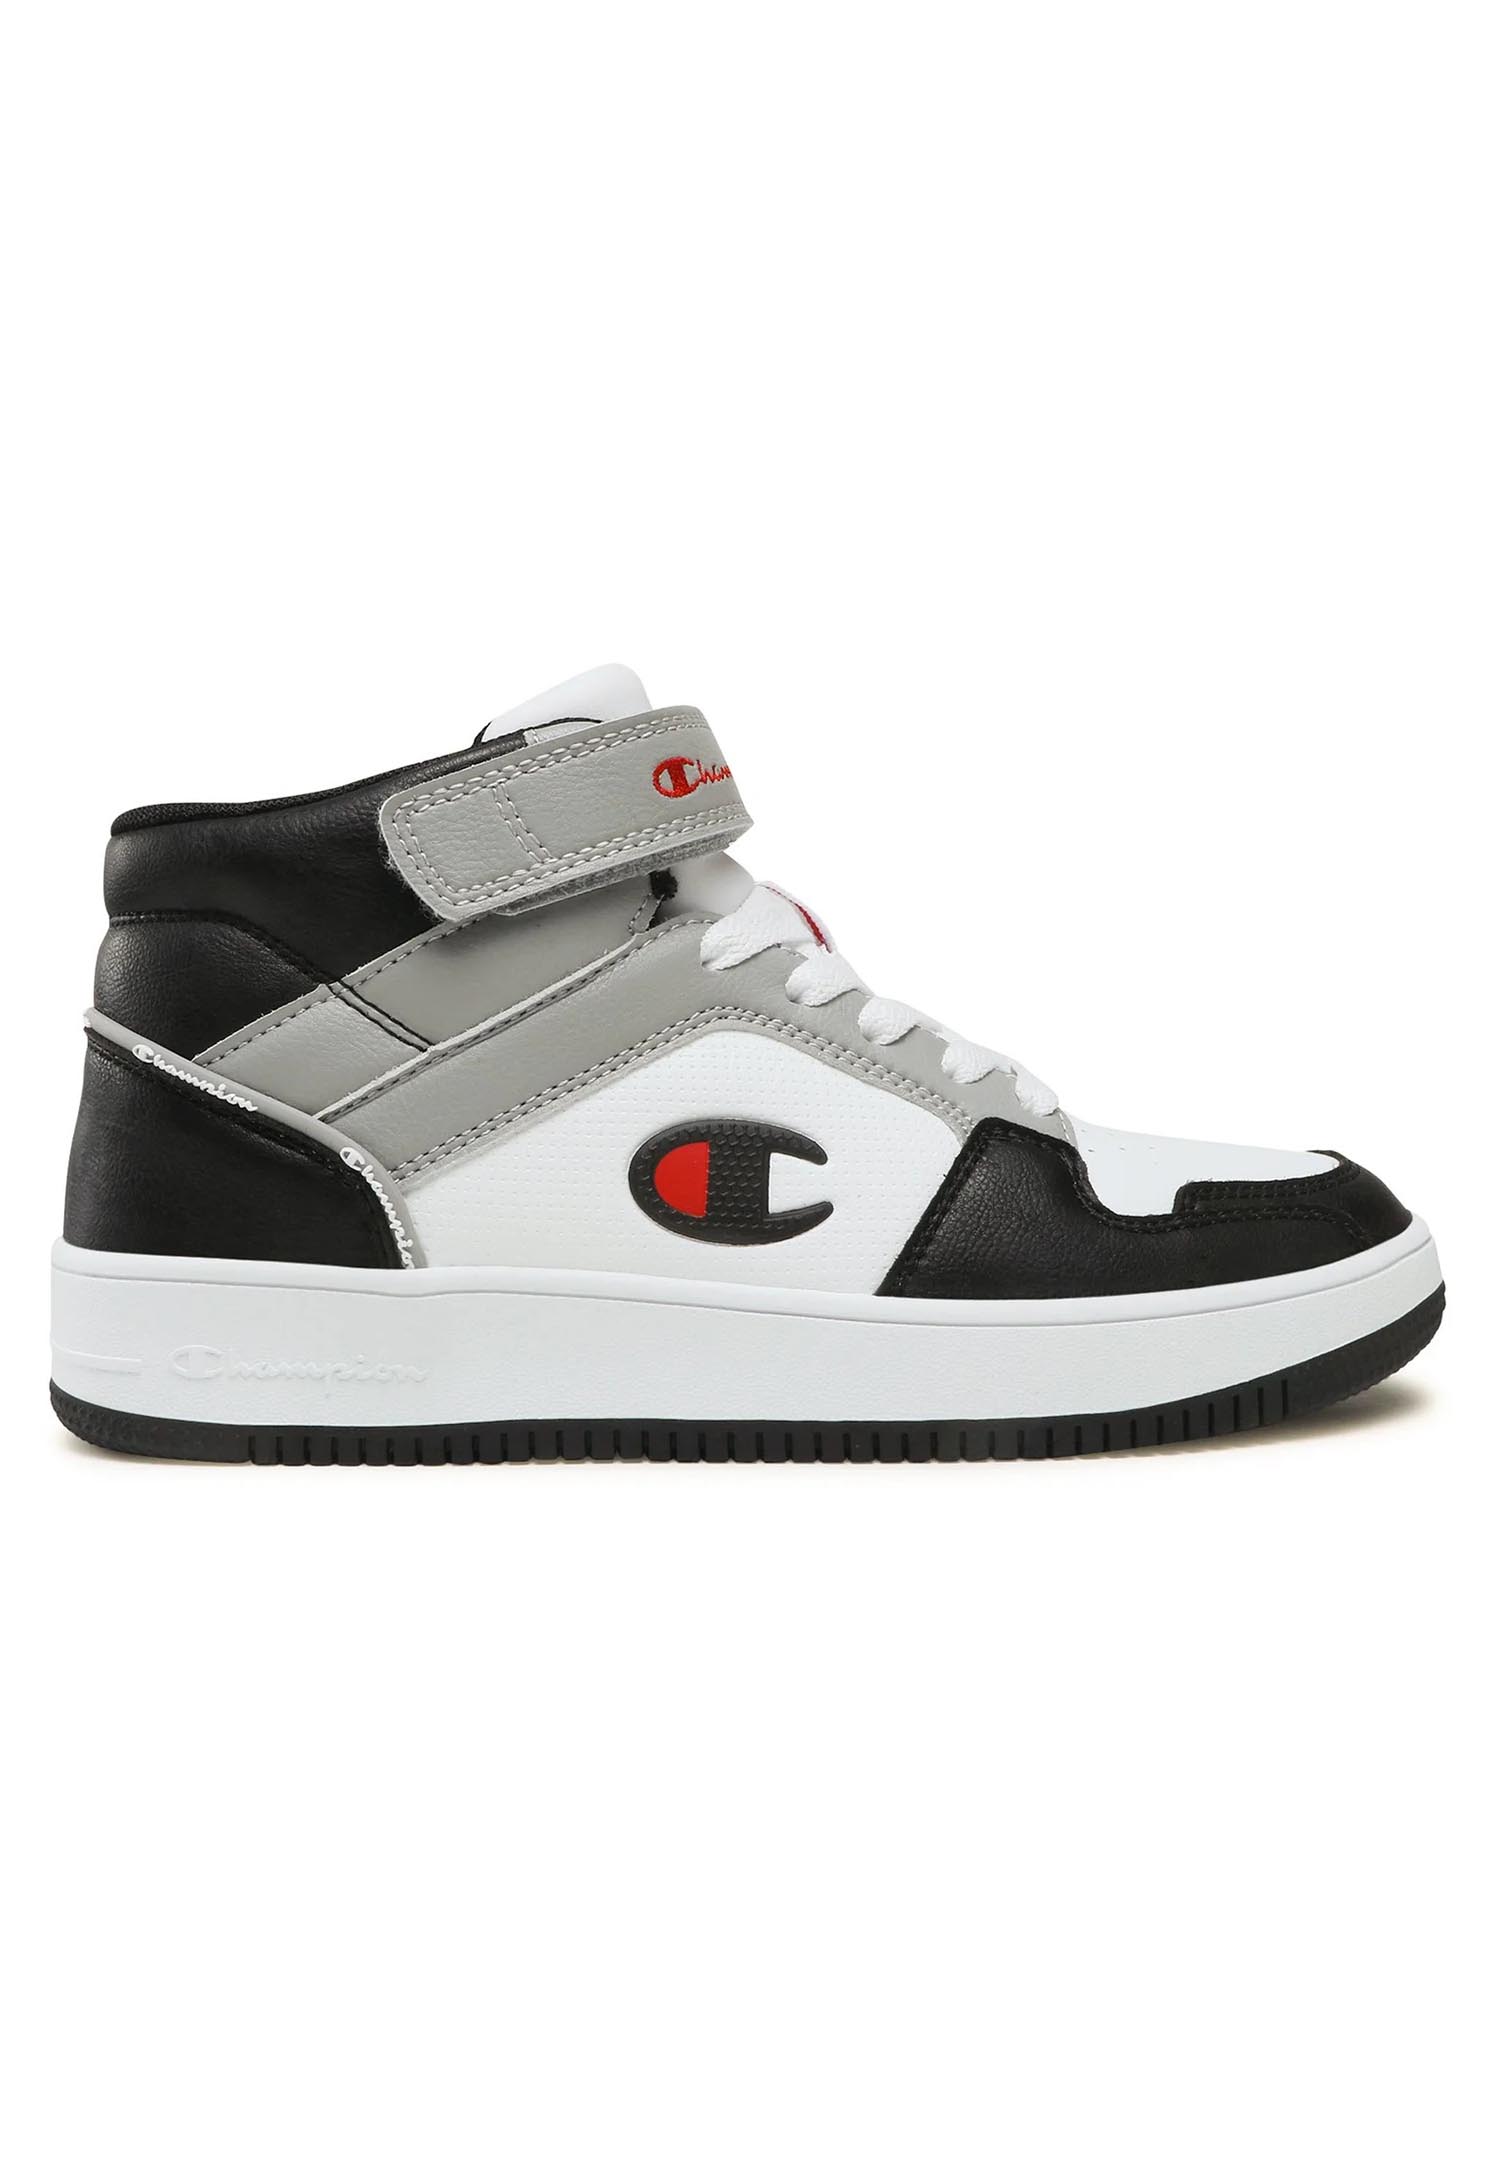 Champion REBOUND 2.0 MID B GS Kinder Sneaker S32413-CHA-WW014 weiss/grau/ schwarz